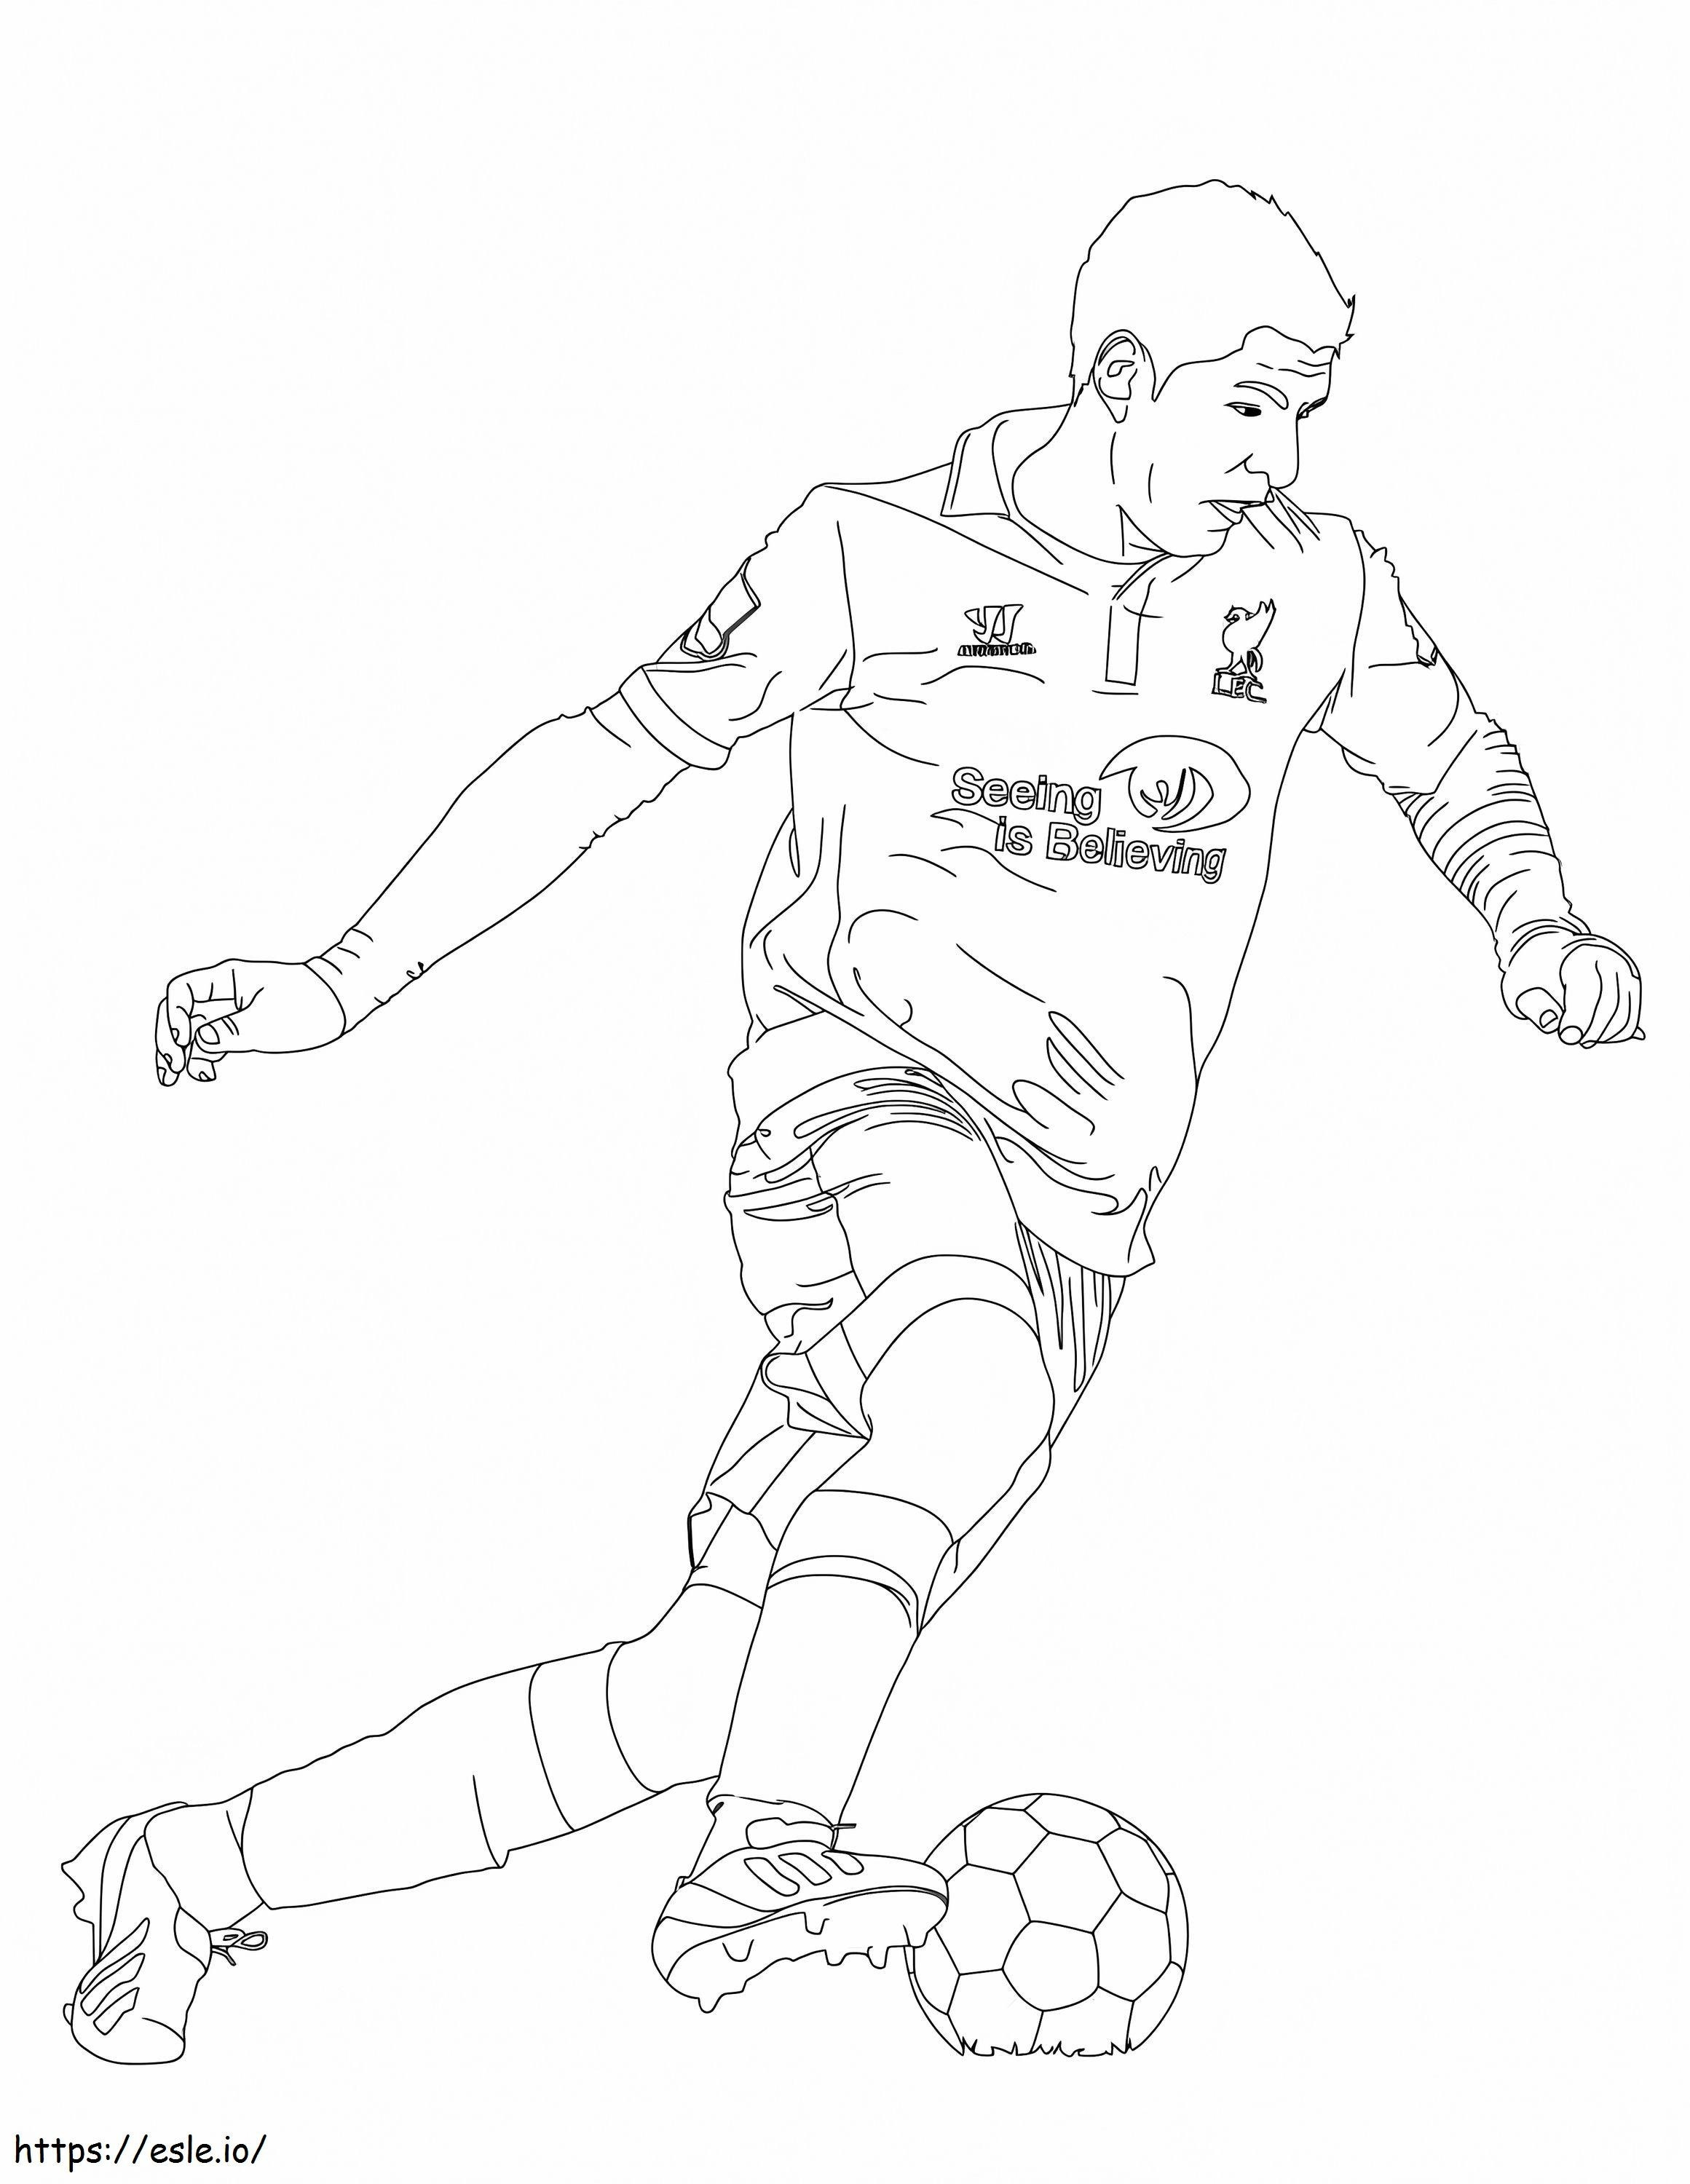 Luis Suarez Kicks A Soccer Ball coloring page